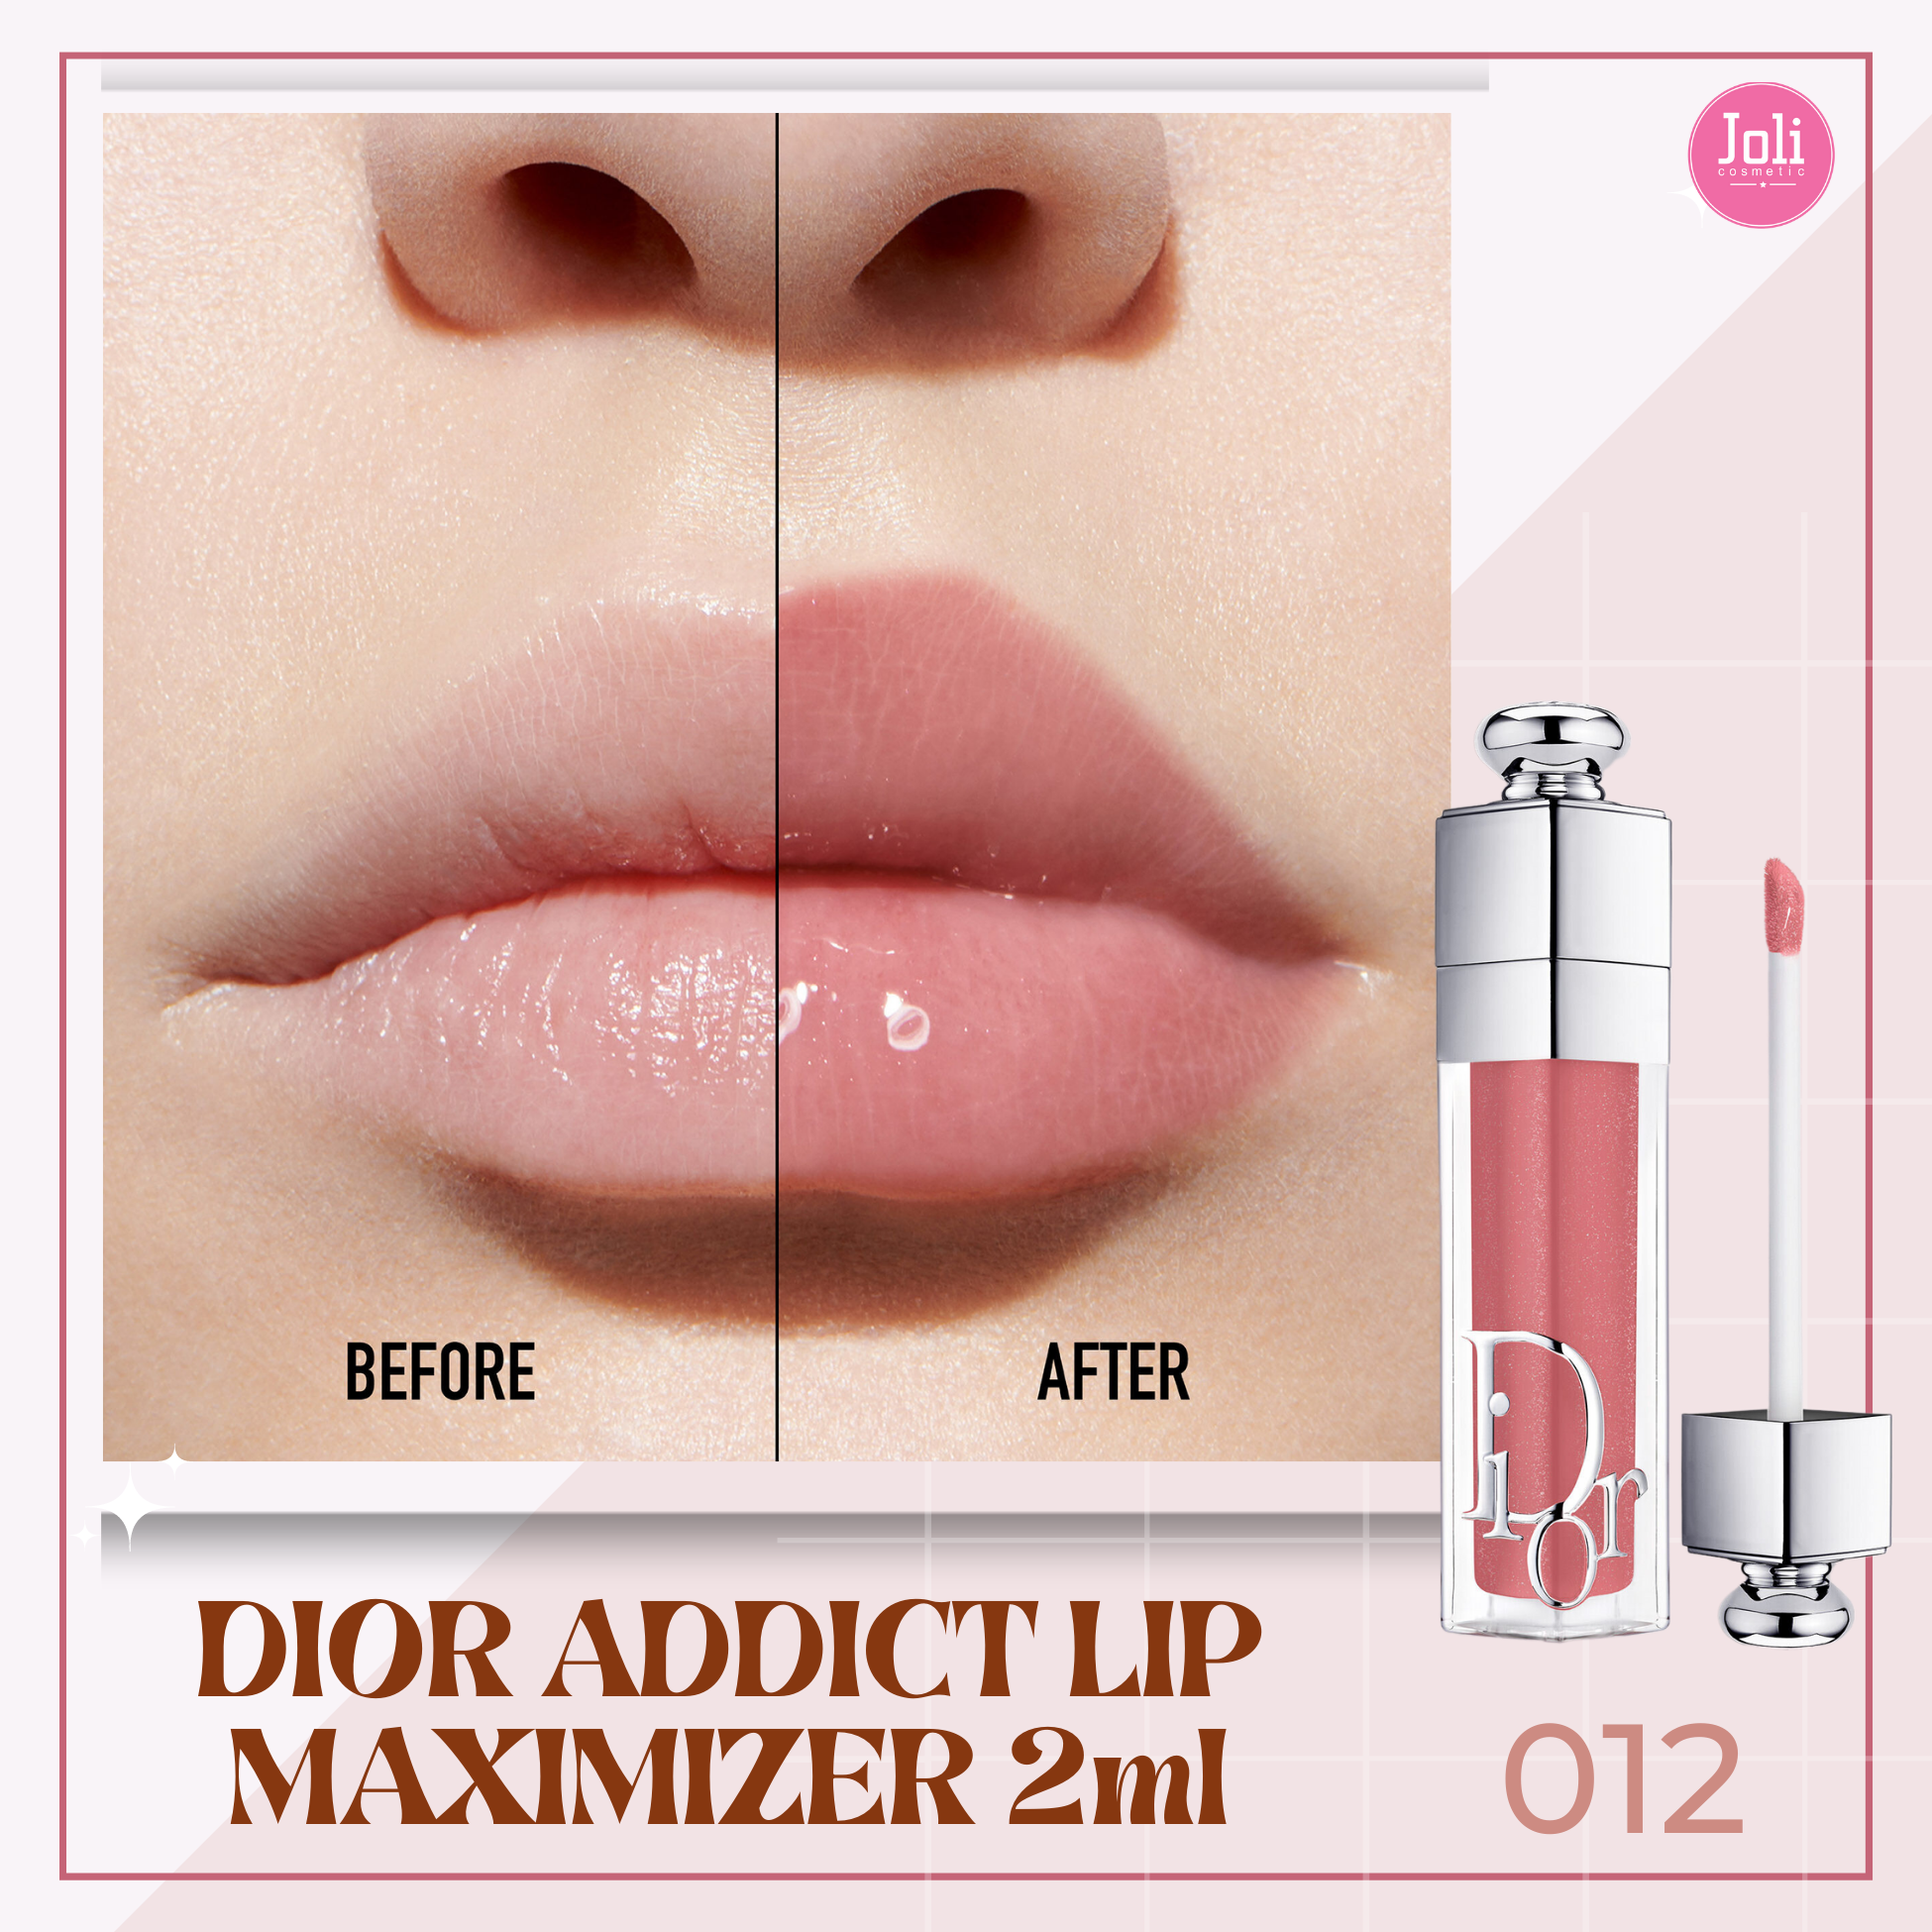 Dior Addict Lip Maximizer High Volume Plumper 2ml 001 Pink Sample Size   eBay